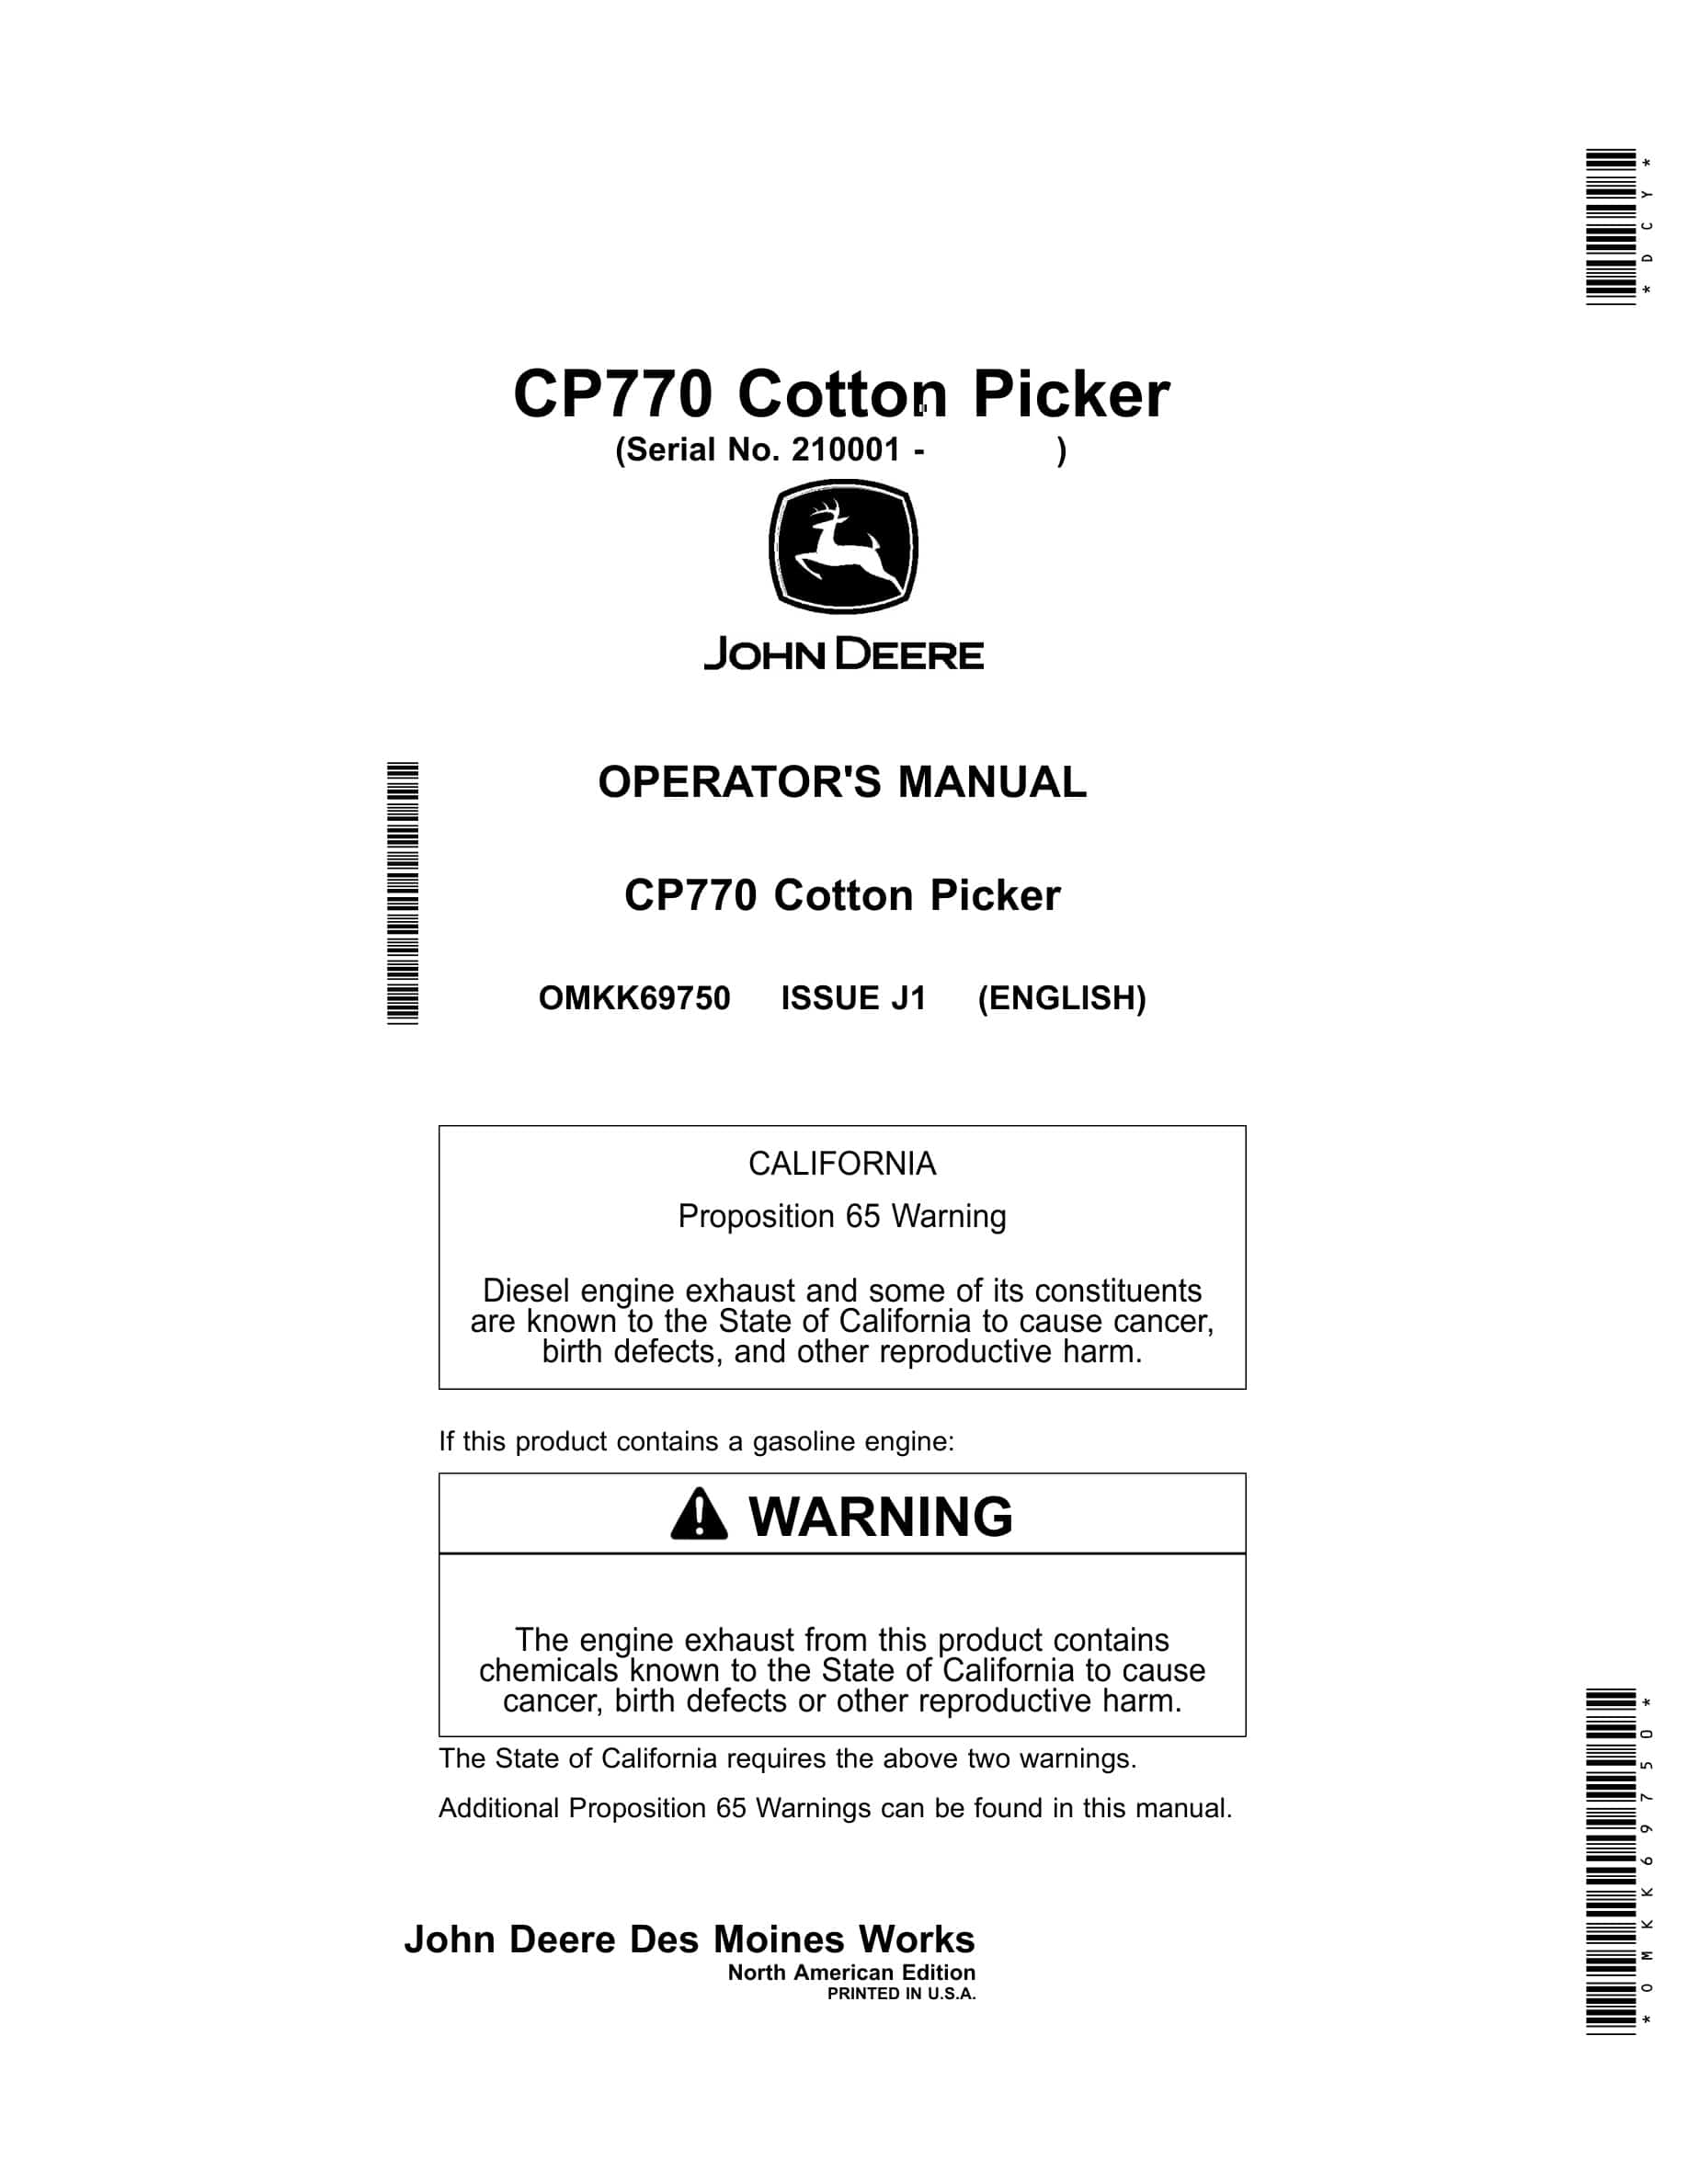 John Deere CP770 Cotton Picker Operator Manual OMKK69750-1